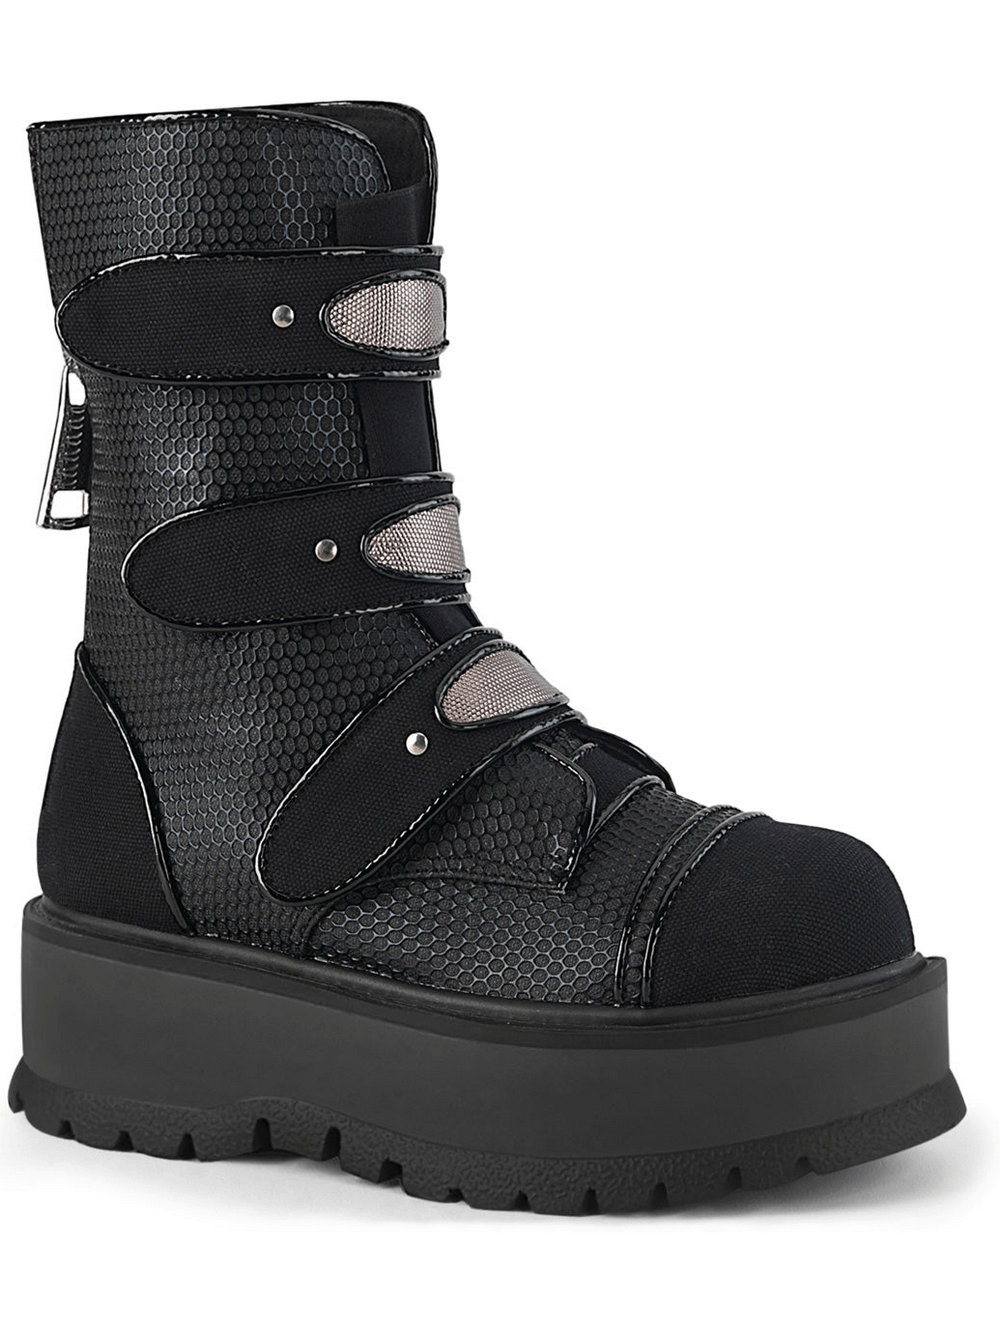 DEMONIA Punk Studded Strap Platform Boots With Metal Zip